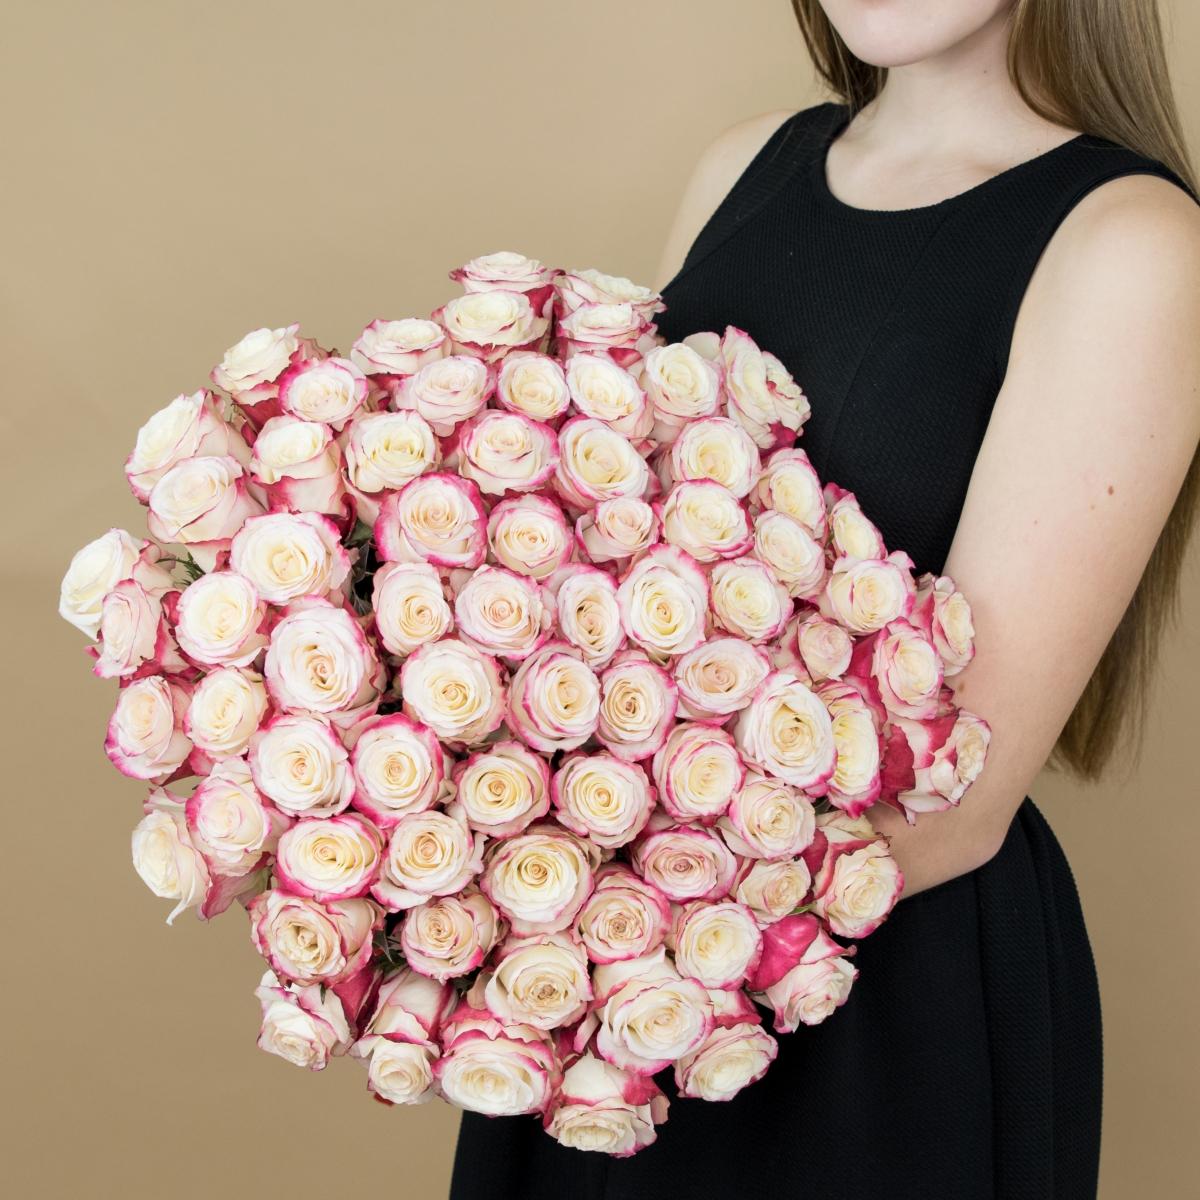 Розы красно-белые 101 шт. (40 см) артикул букета  1602iv